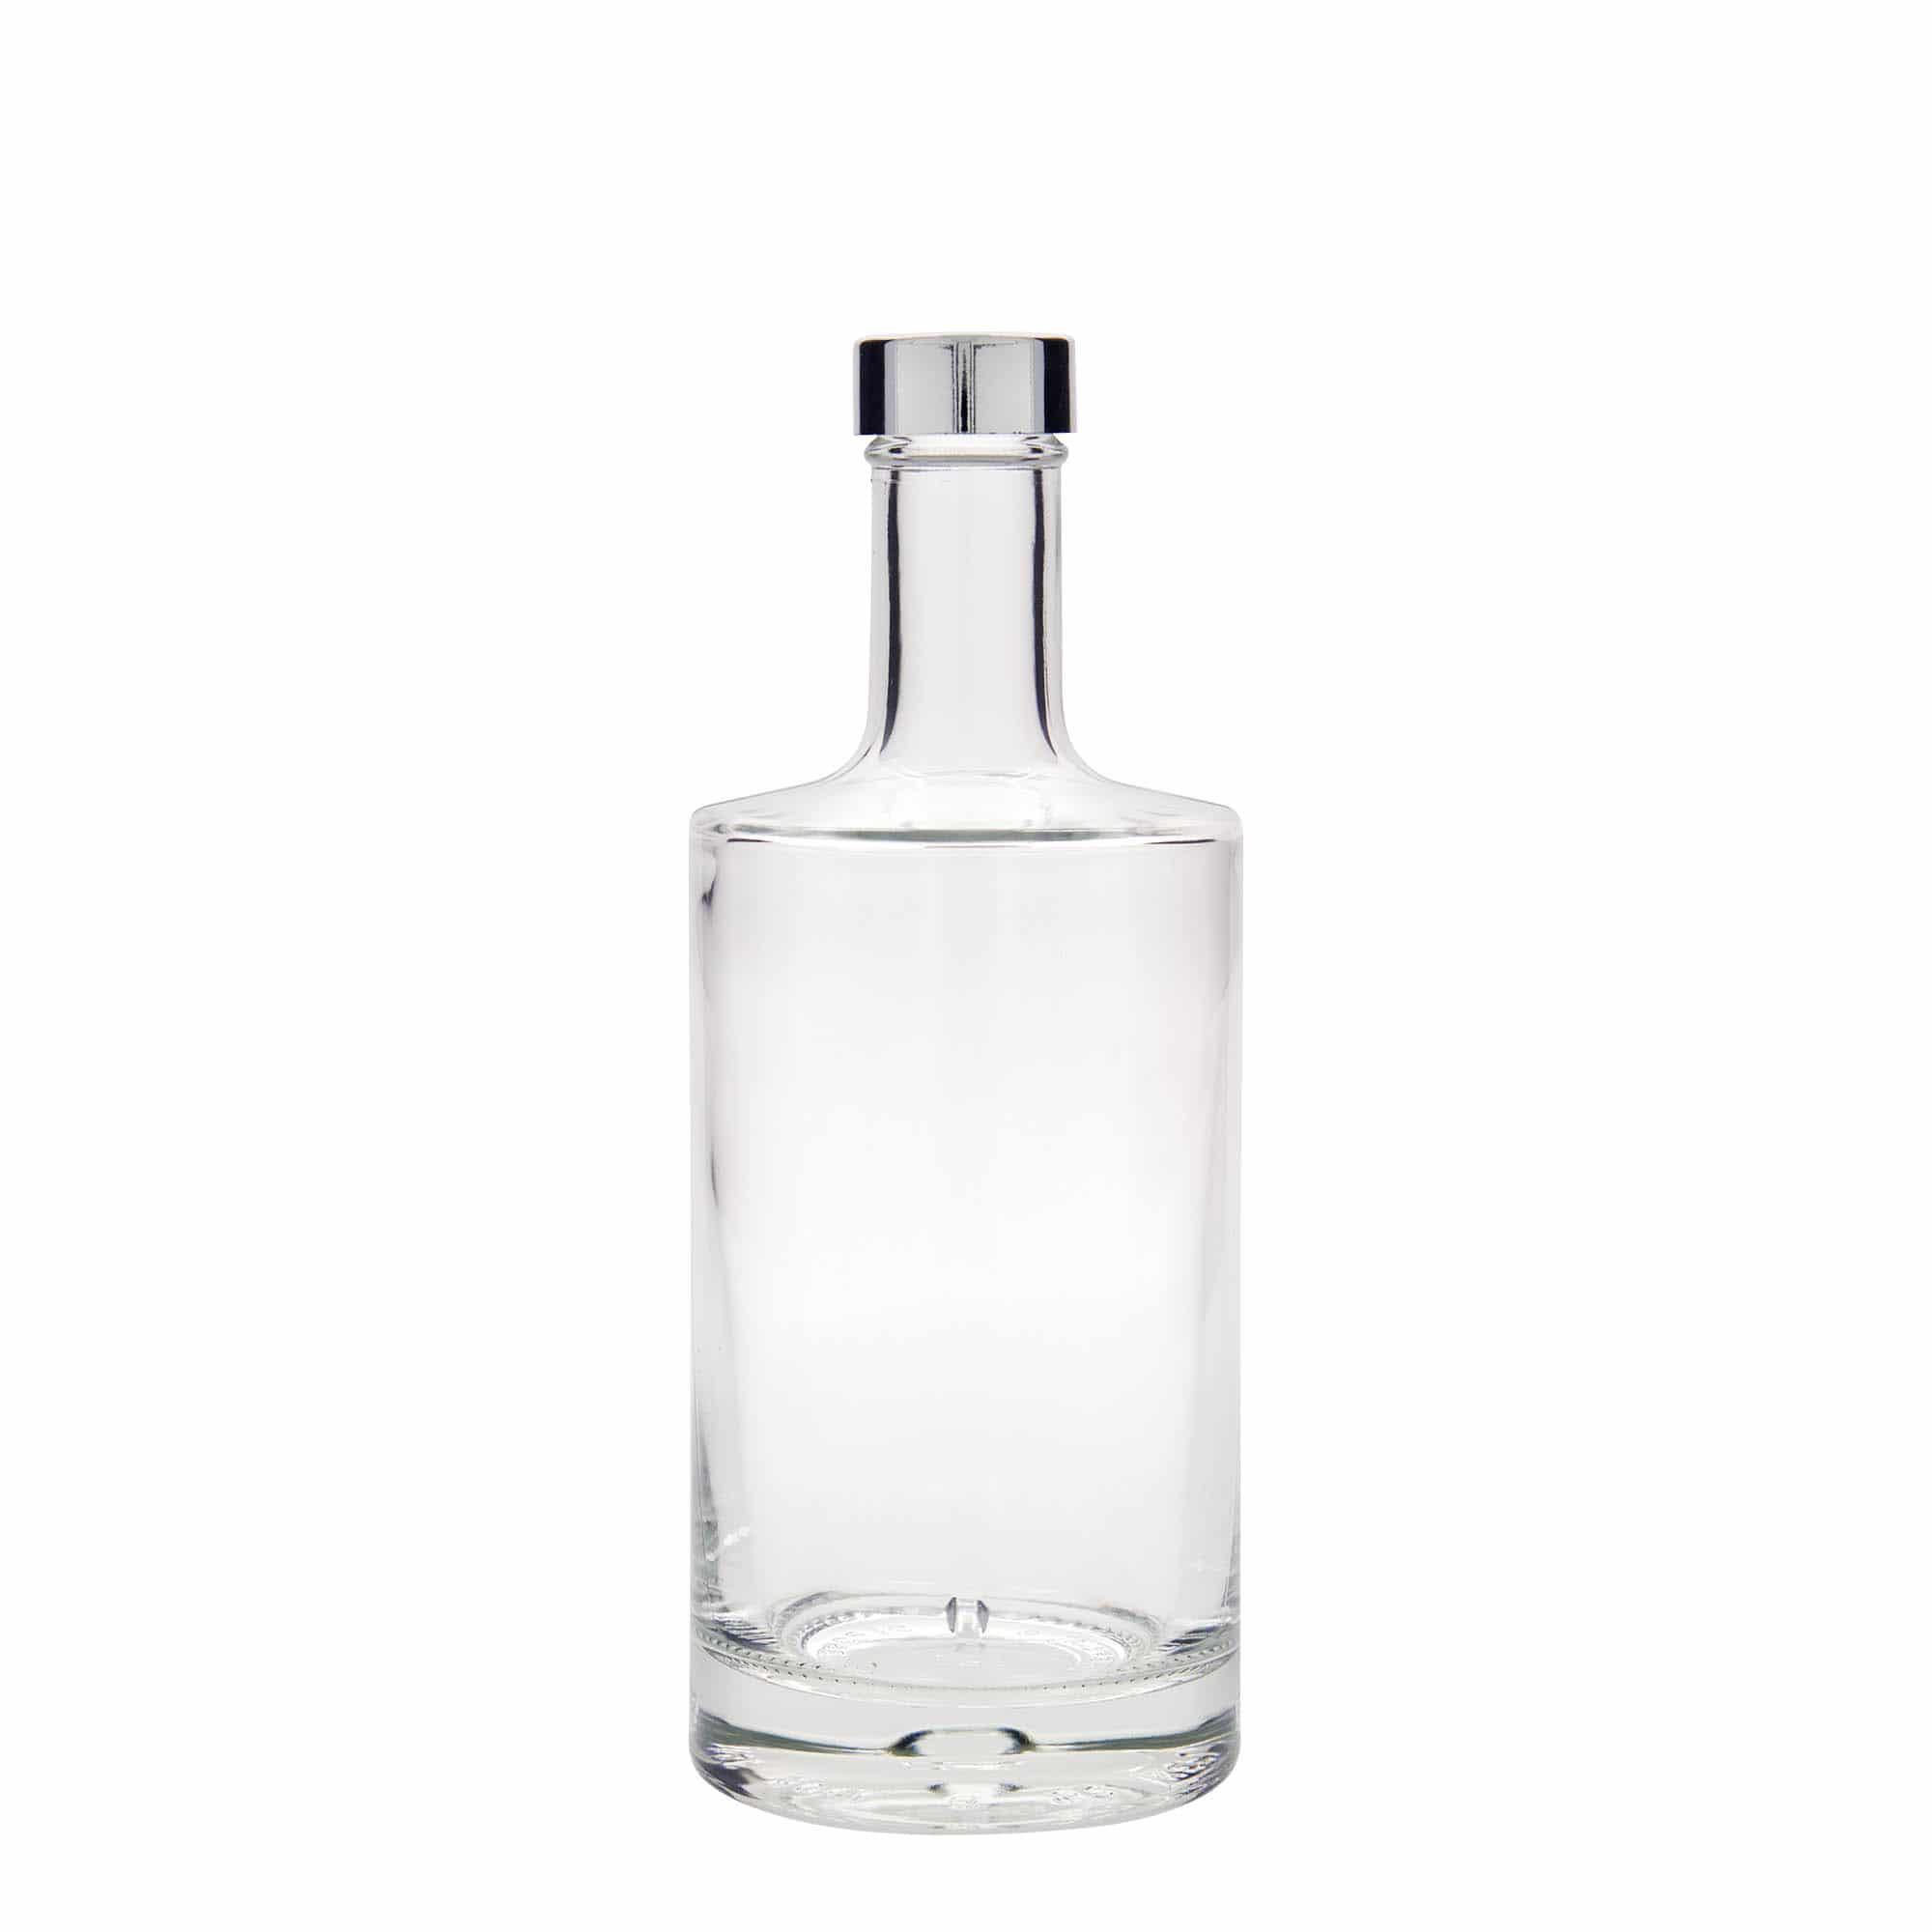 500 ml glass bottle 'Homeland', closure: GPI 28